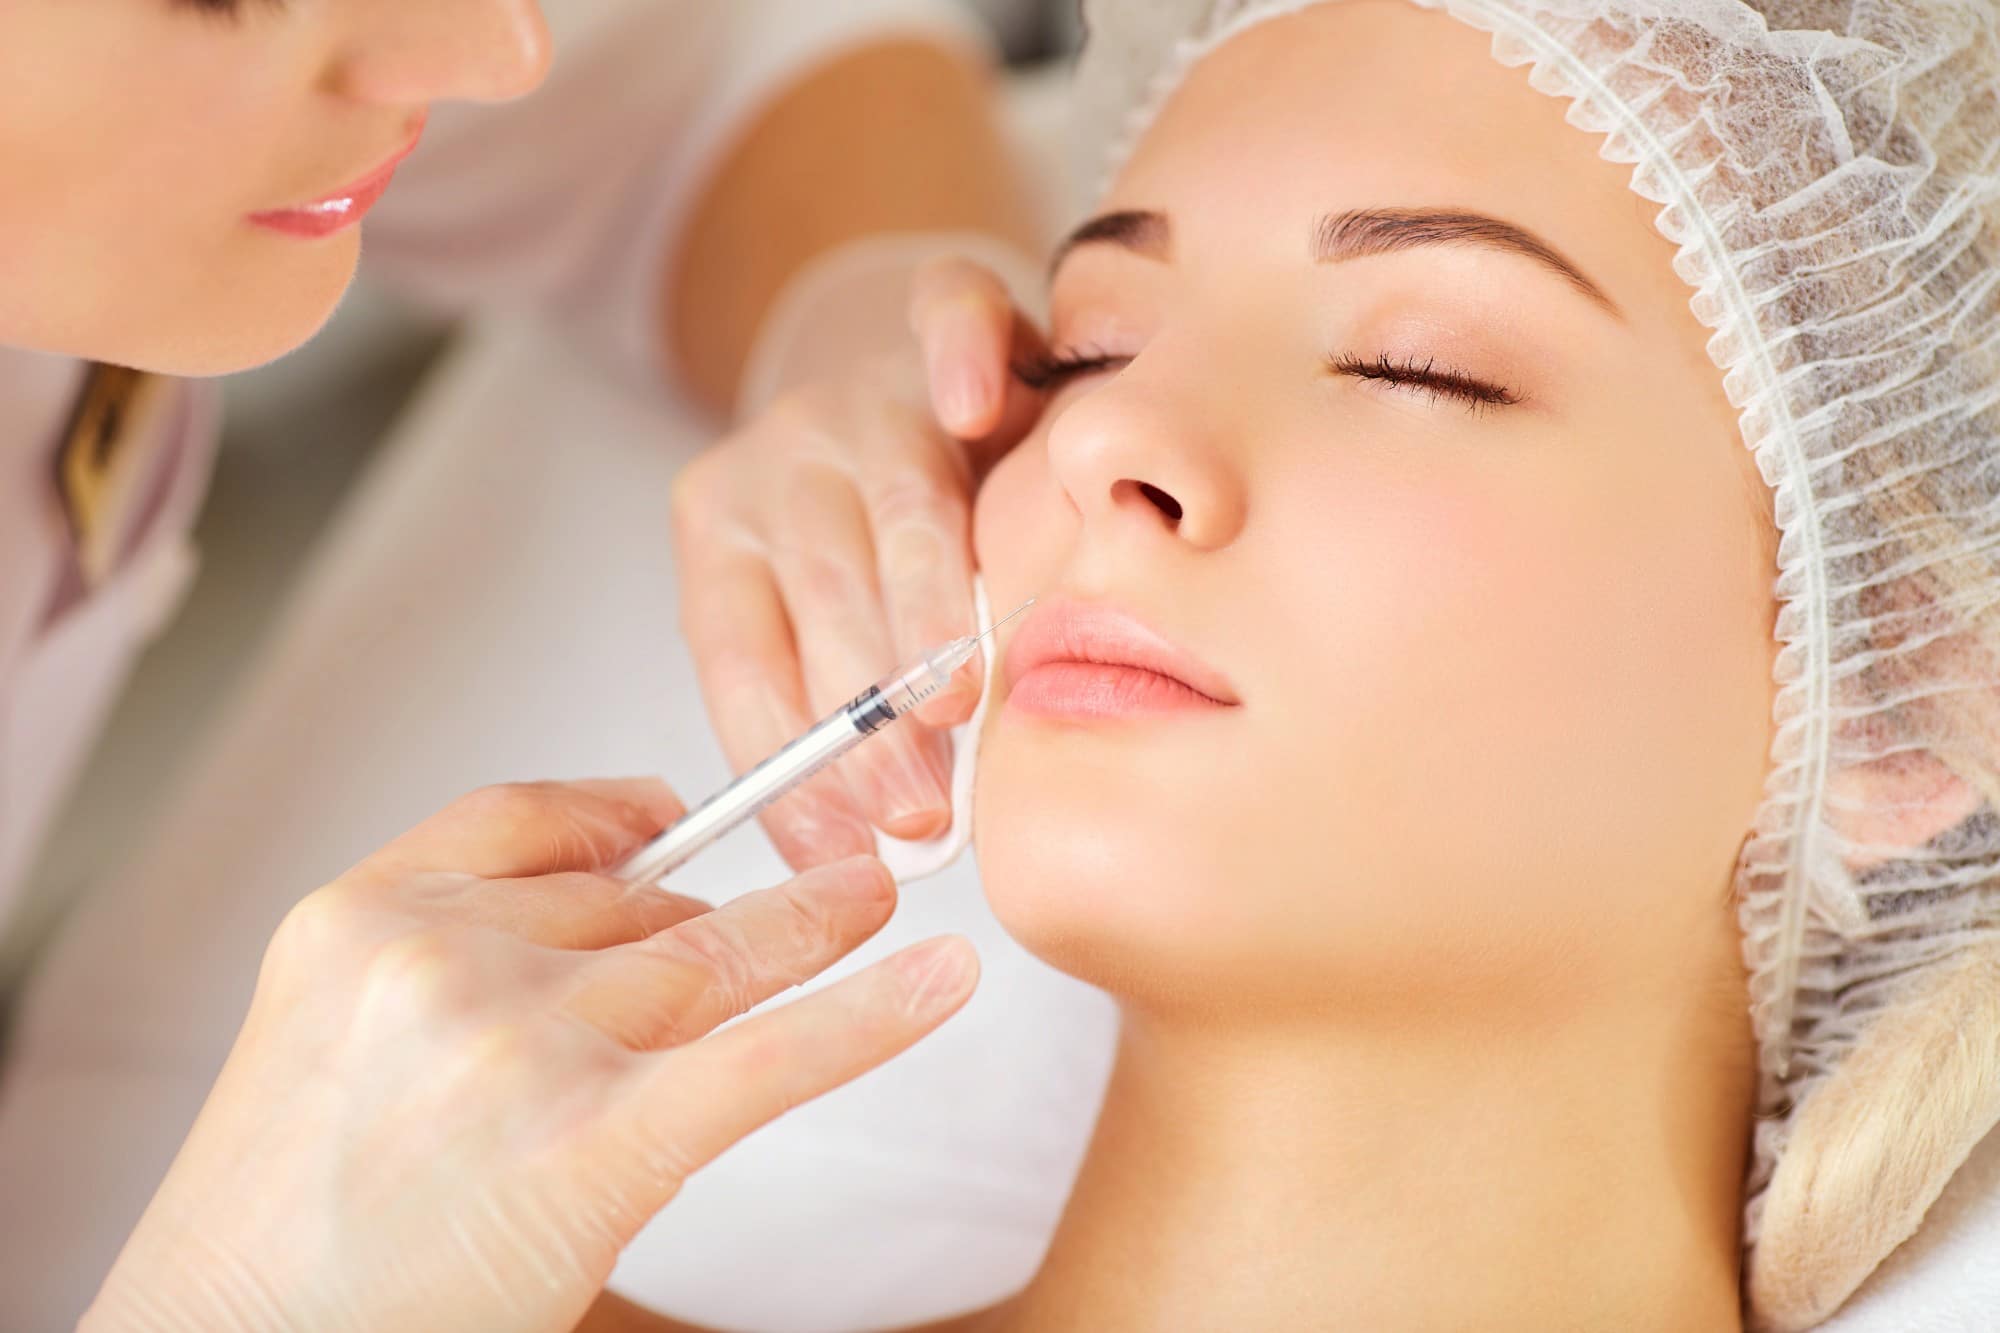 Botox Benefits: 5 Ways to Improve Your Health With Botox